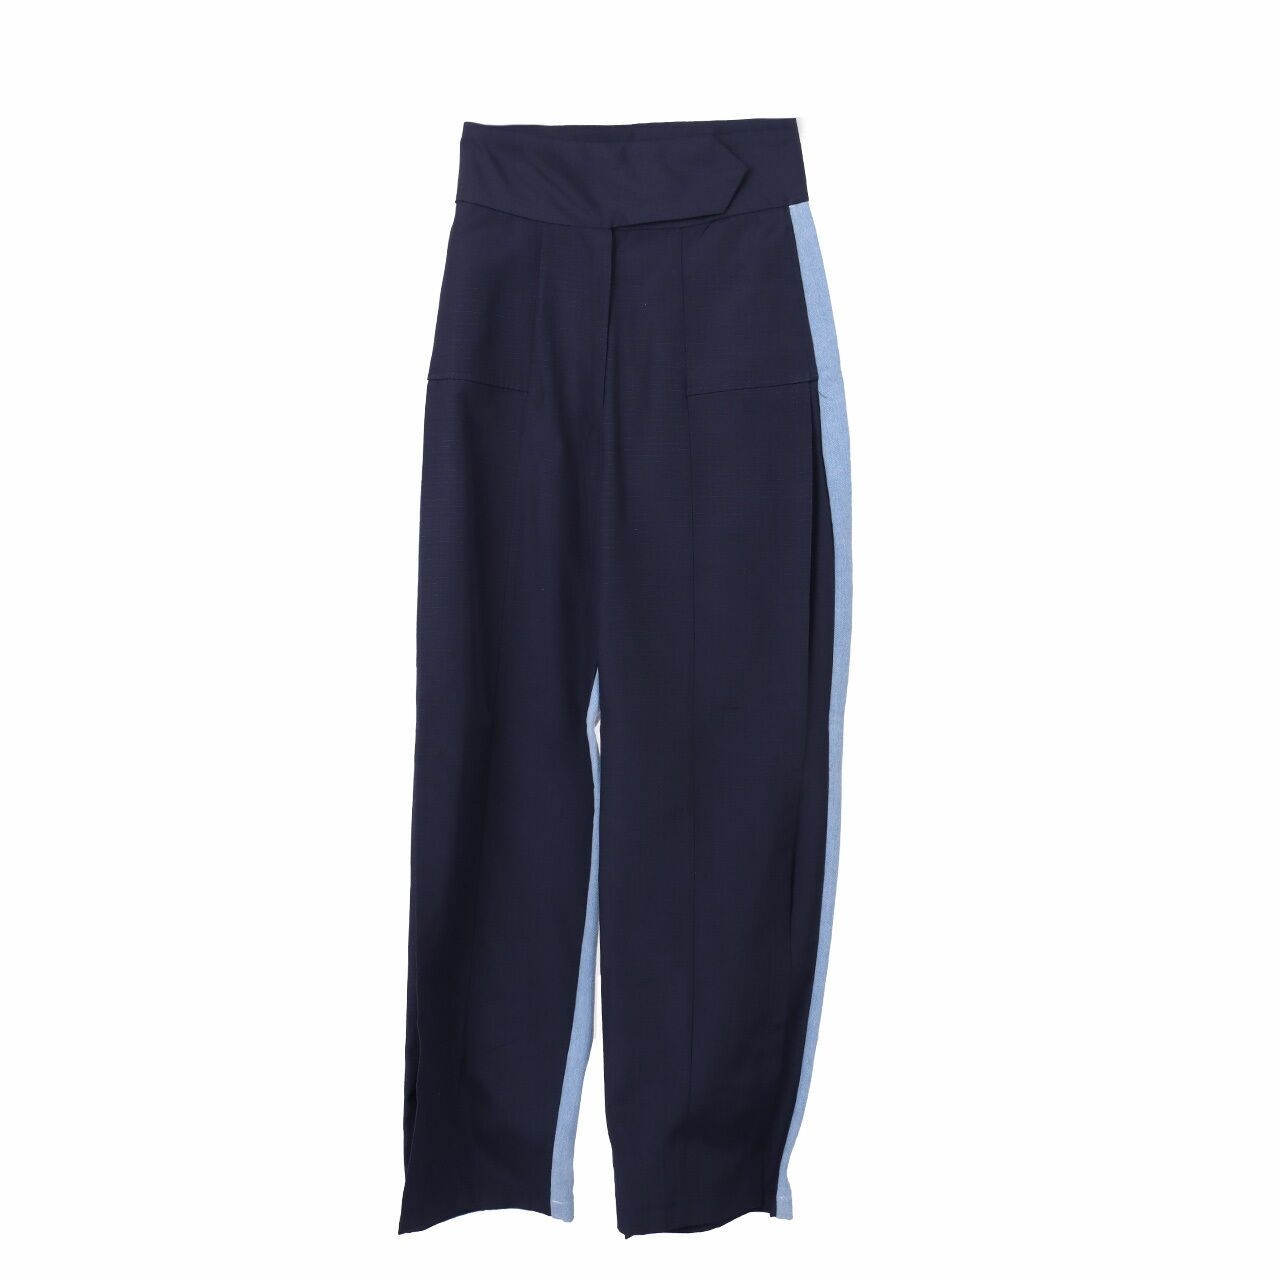 Danjyo Hiyoji Blue & Navy Long Pants